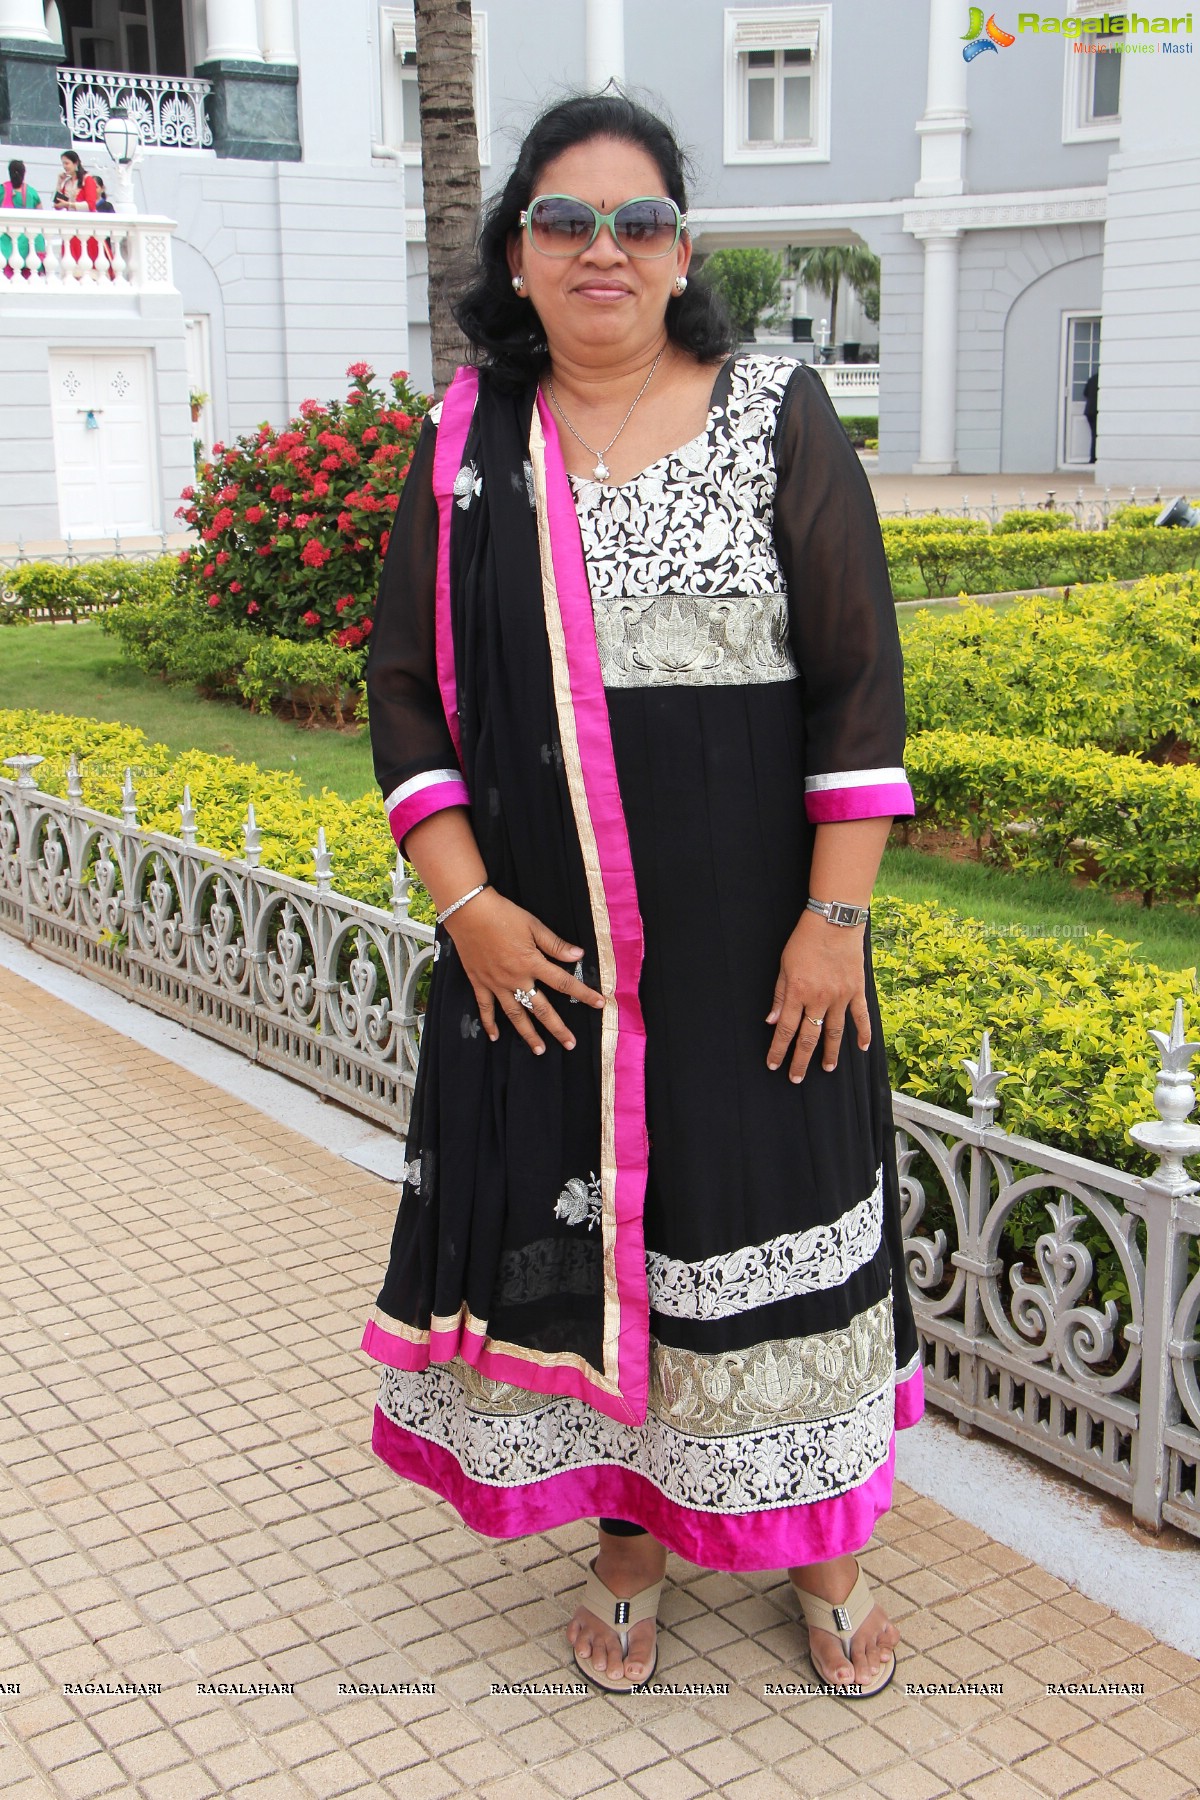 Saheli Ladies Club Get-Together at Falaknuma Palace, Hyderabad